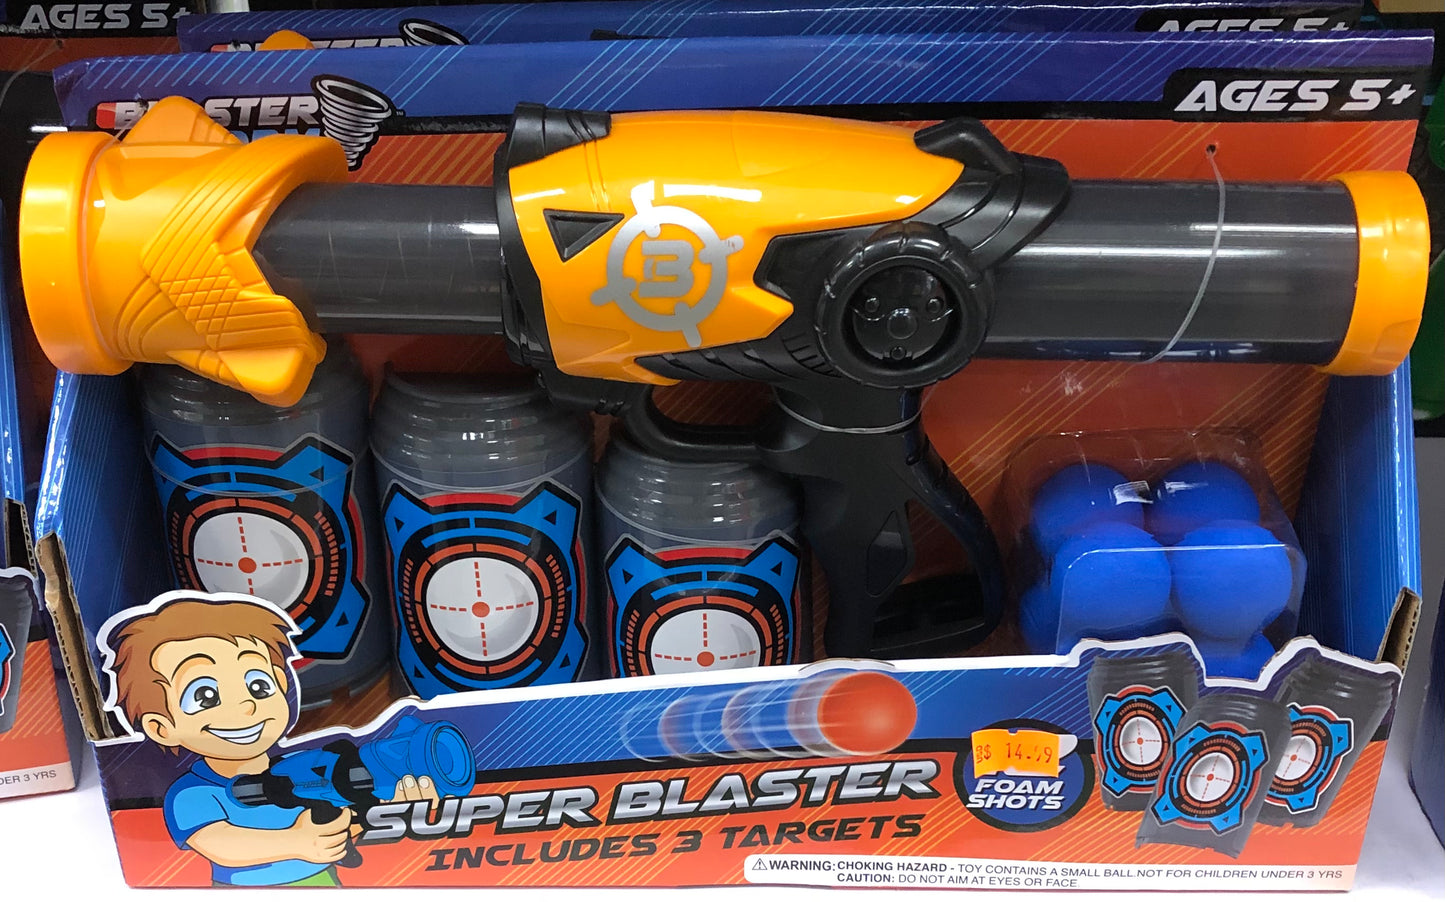 Super Blaster